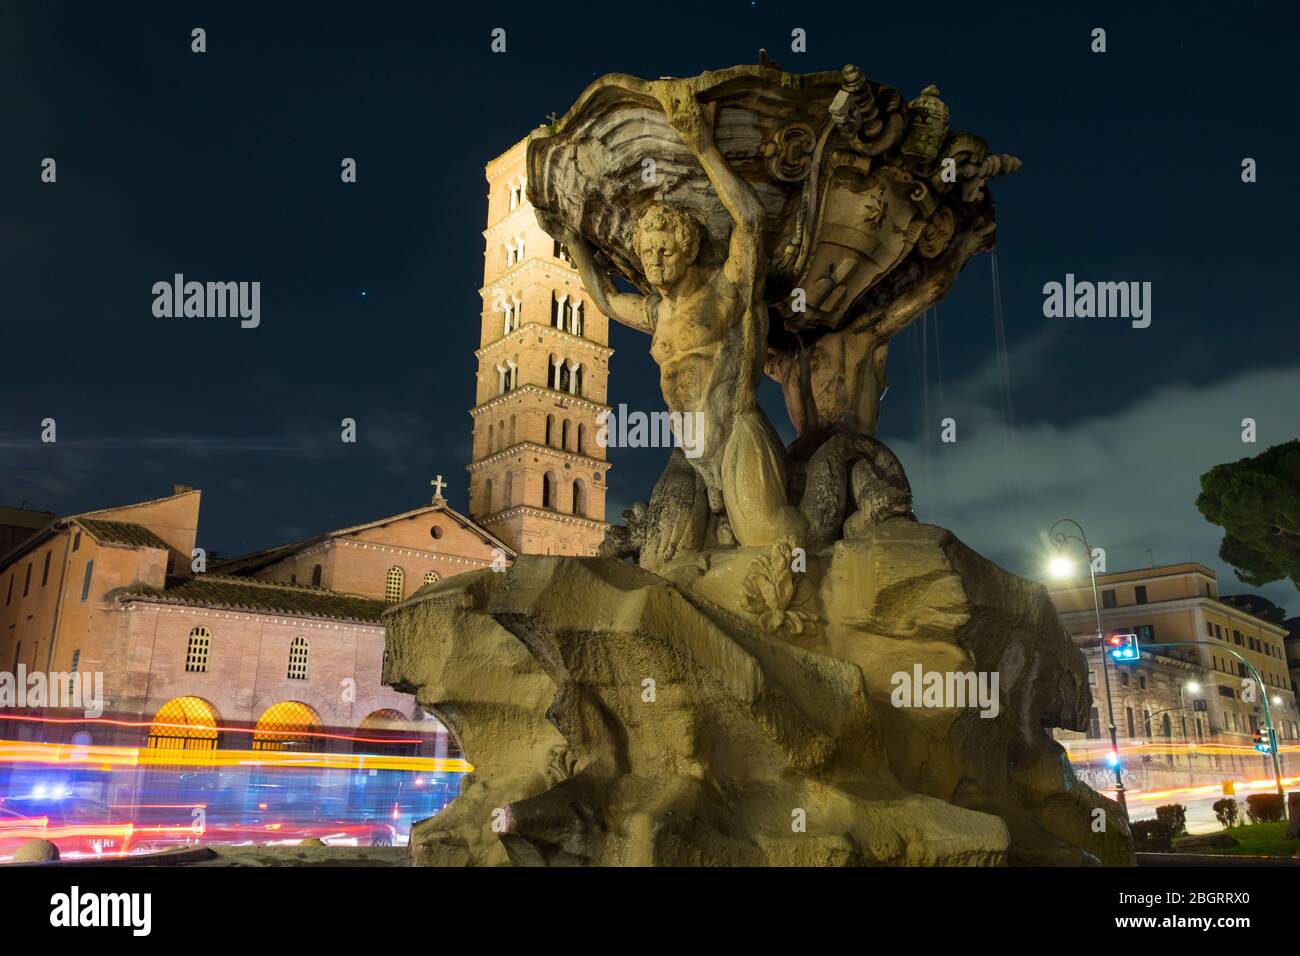 Italy, Rome, Fountain of tritons and the church of Santa Maria in Cosmedin. Stock Photo